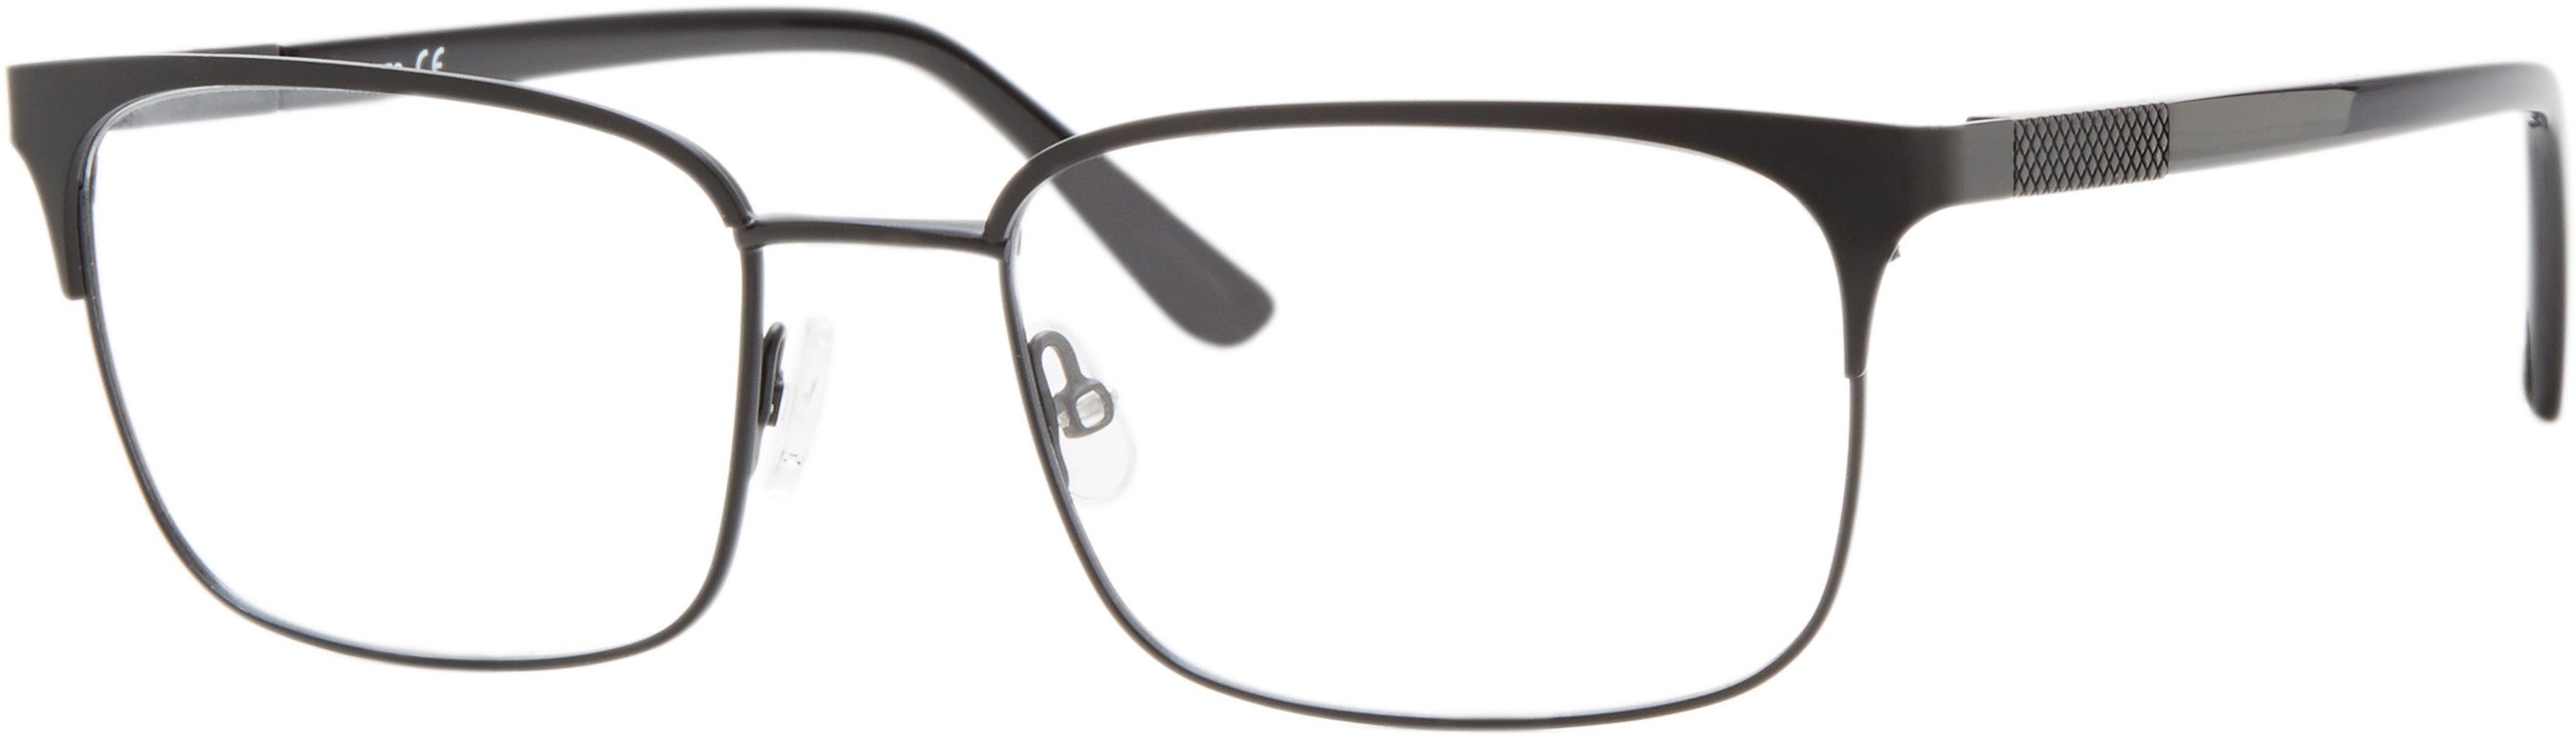  Claiborne 251 Square Eyeglasses 0003-0003  Matte Black (00 Demo Lens)